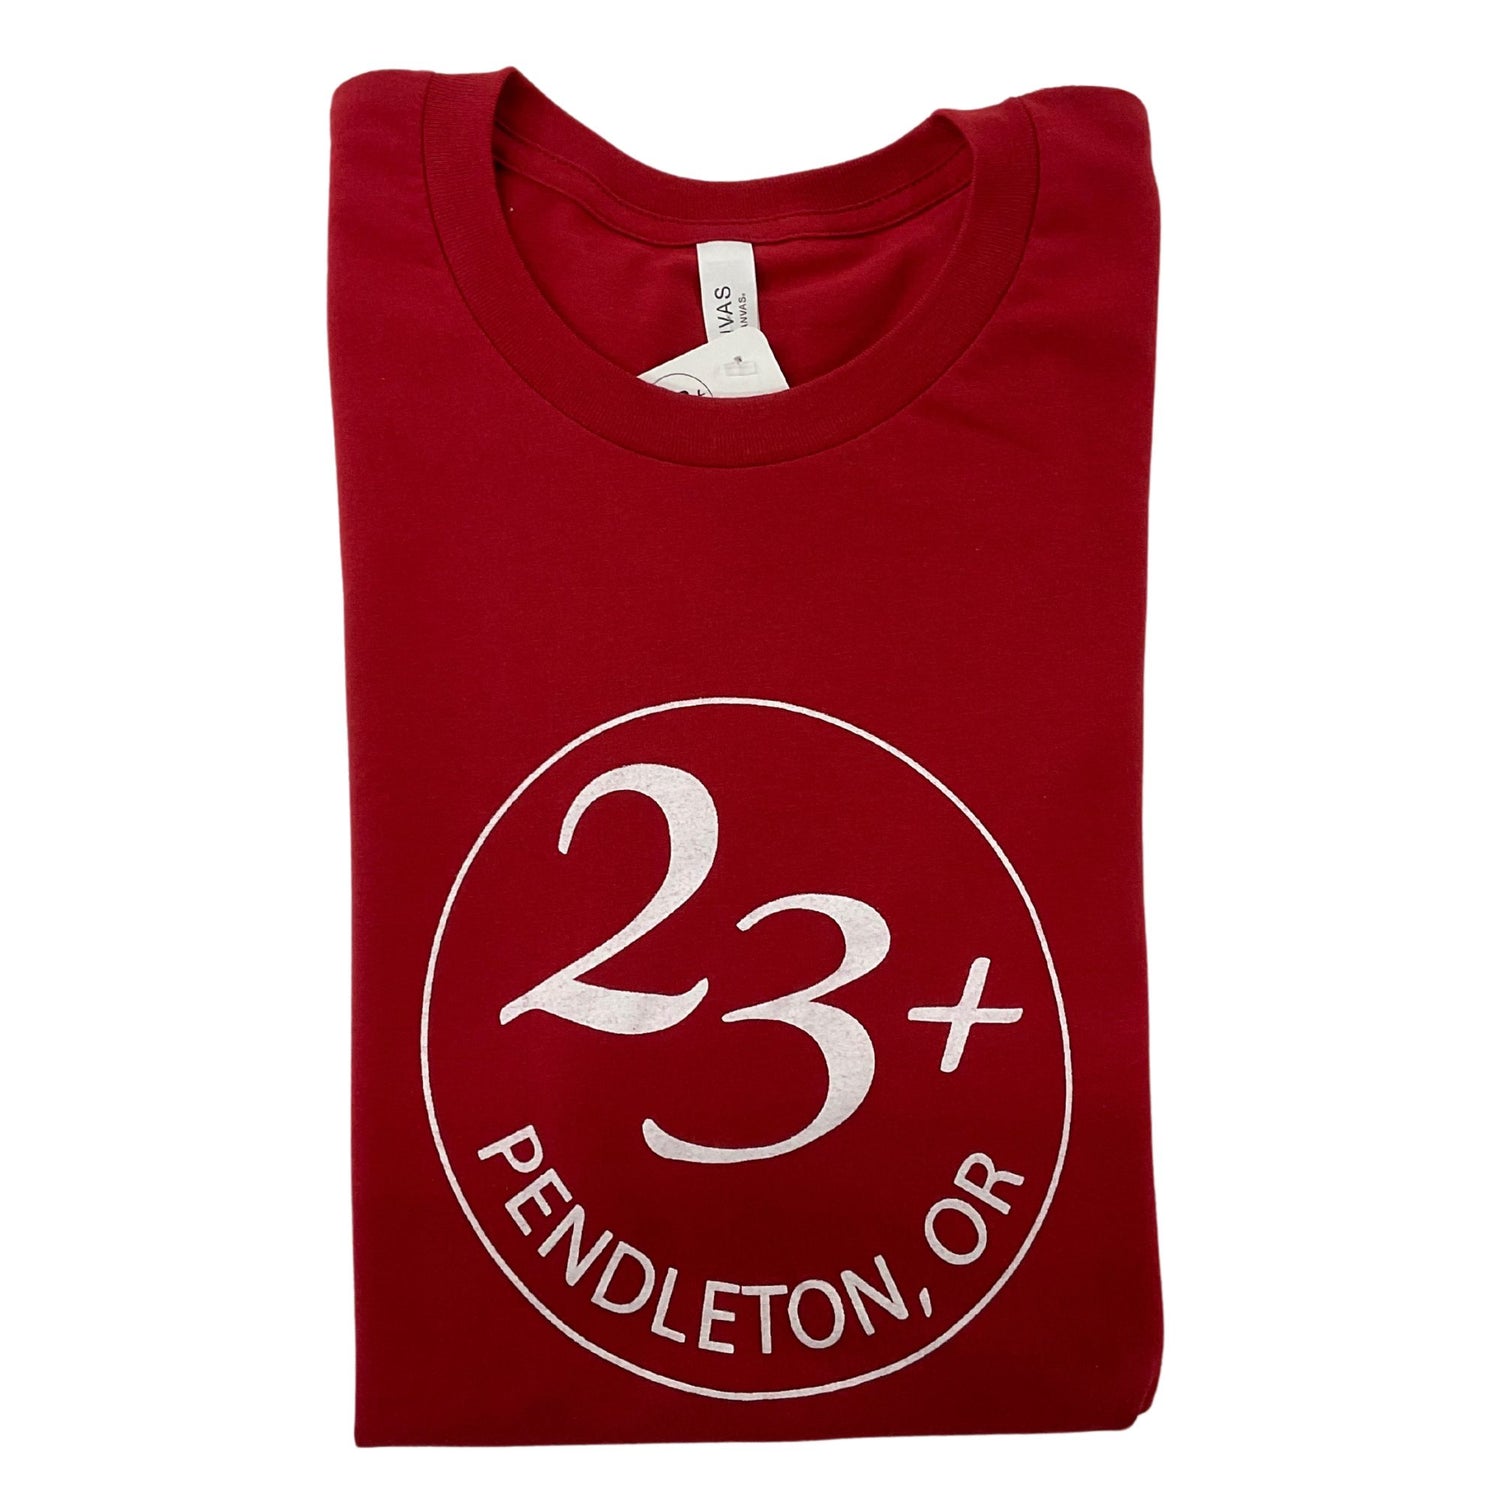 23+ Logo T-shirt Crew Neck- Red